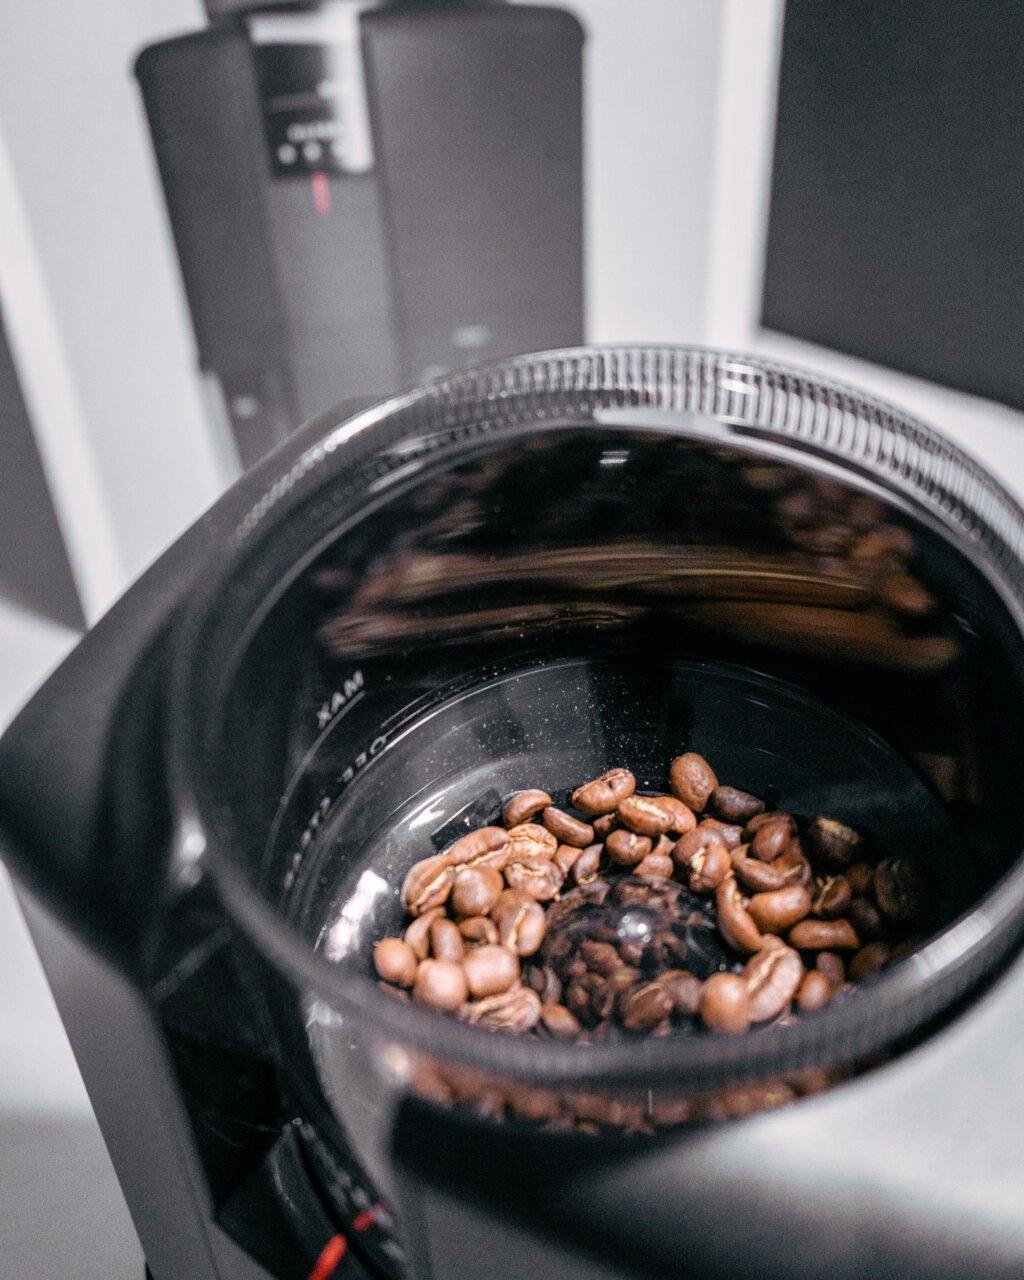 Wilfa Svart Precision Burr Coffee Grinder (Black)